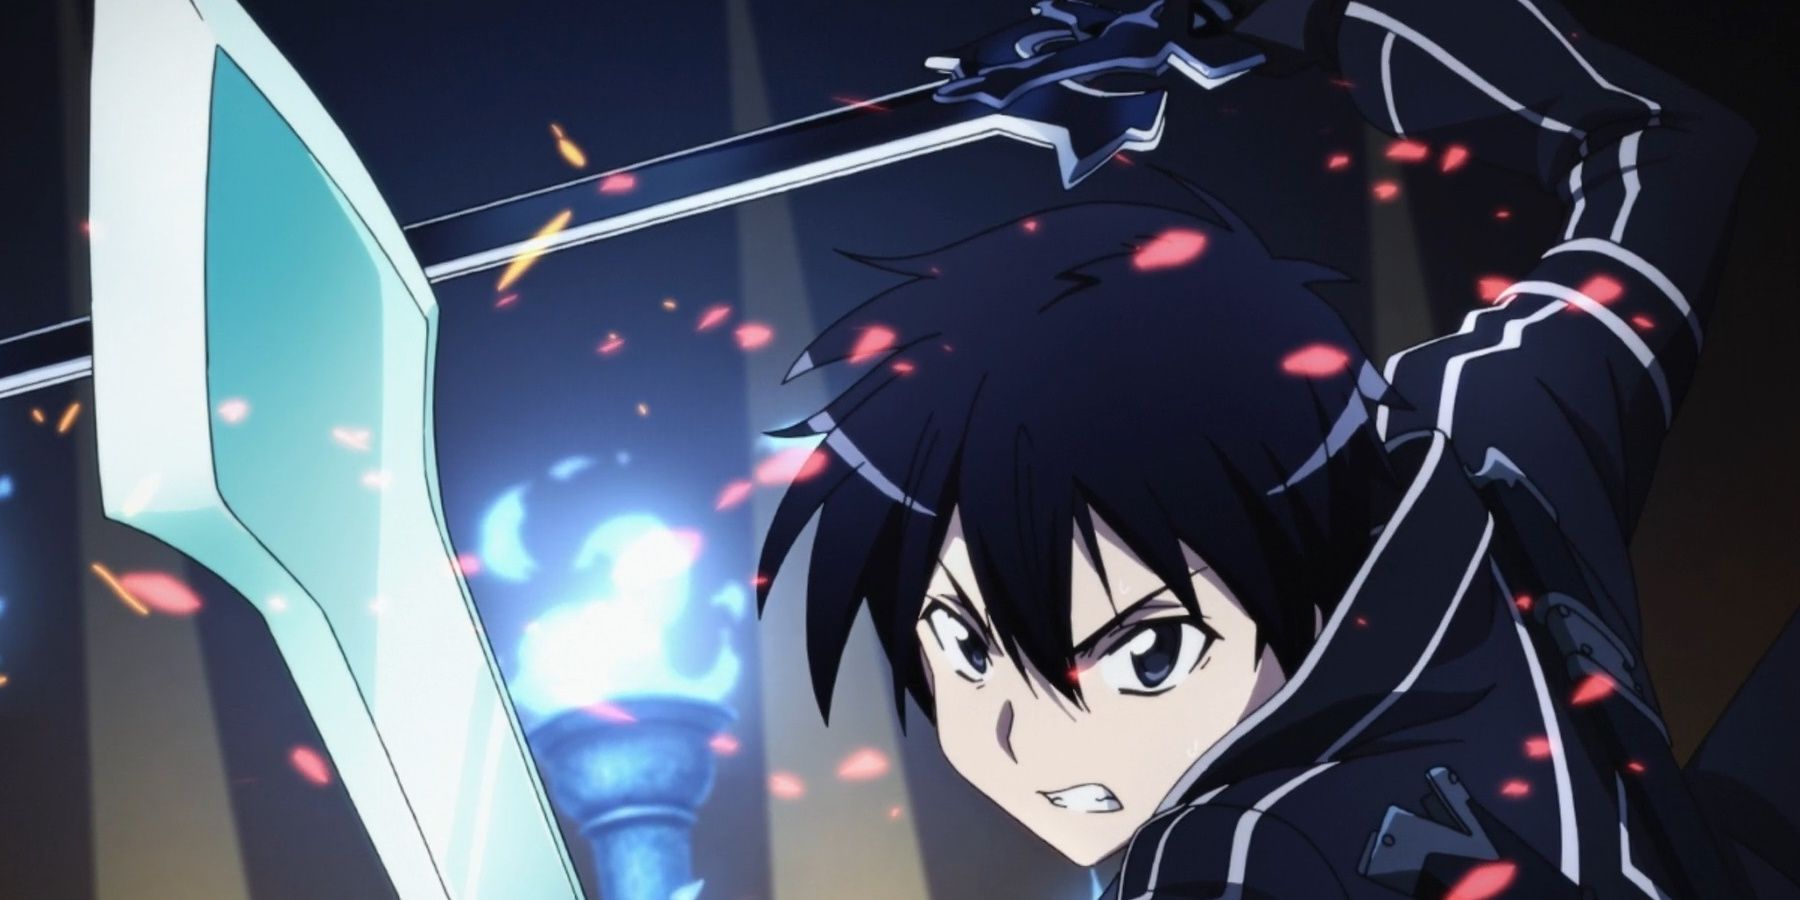 Kirito's Dual Wielding Skill, Sword Art Online